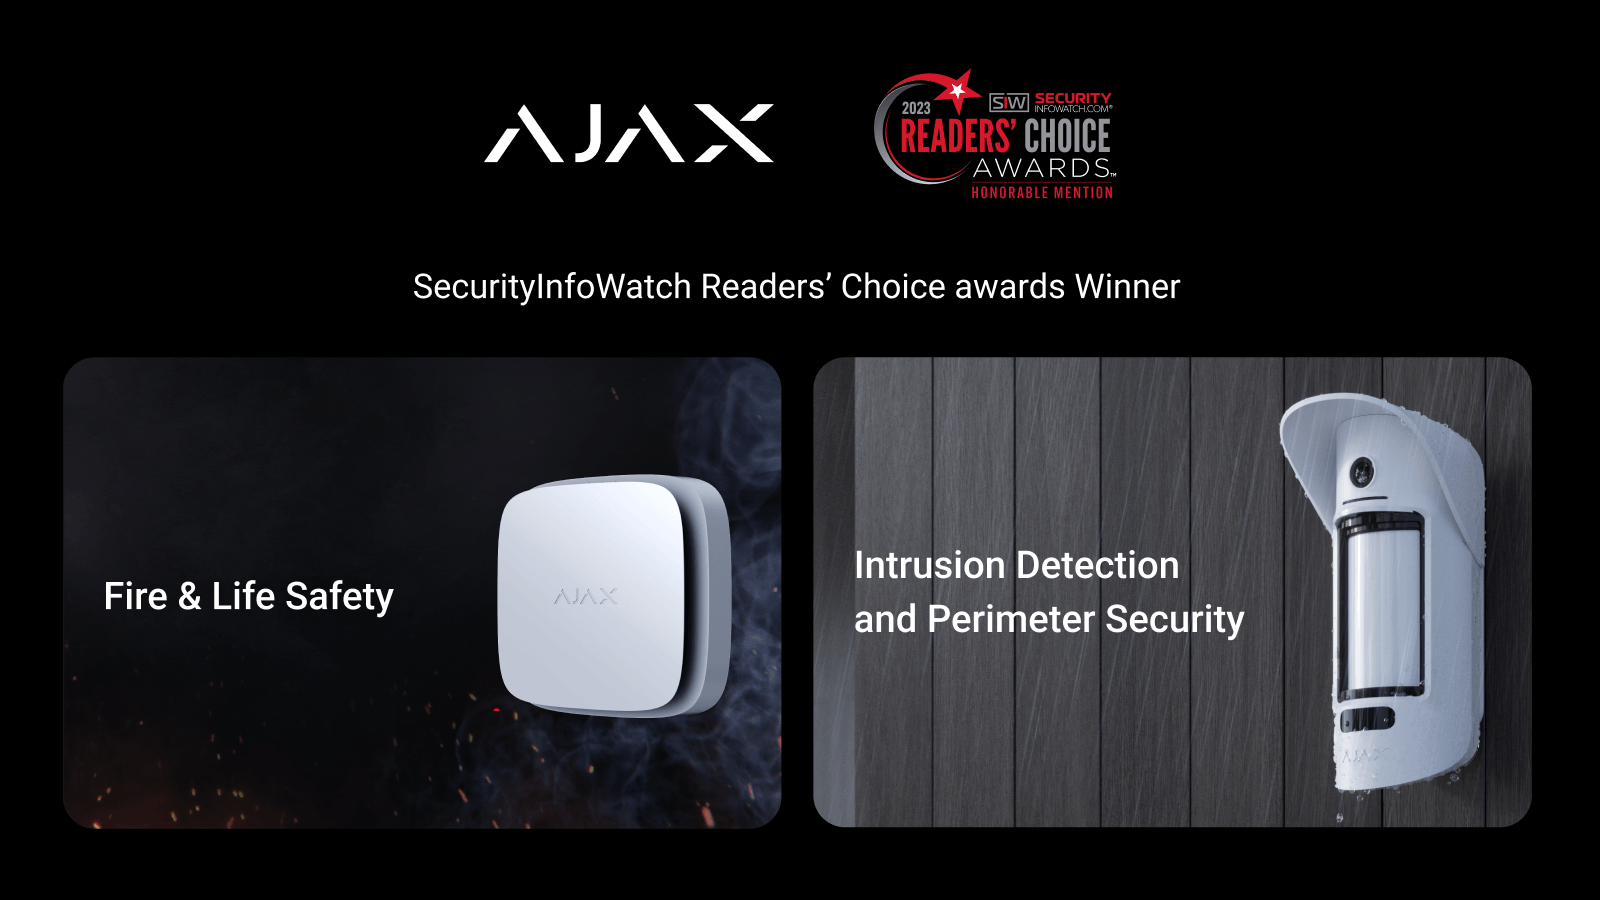 Ajax Systems vince 2 categorie ai premi SecurityInfoWatch.com Readers' Choice Awards negli USA